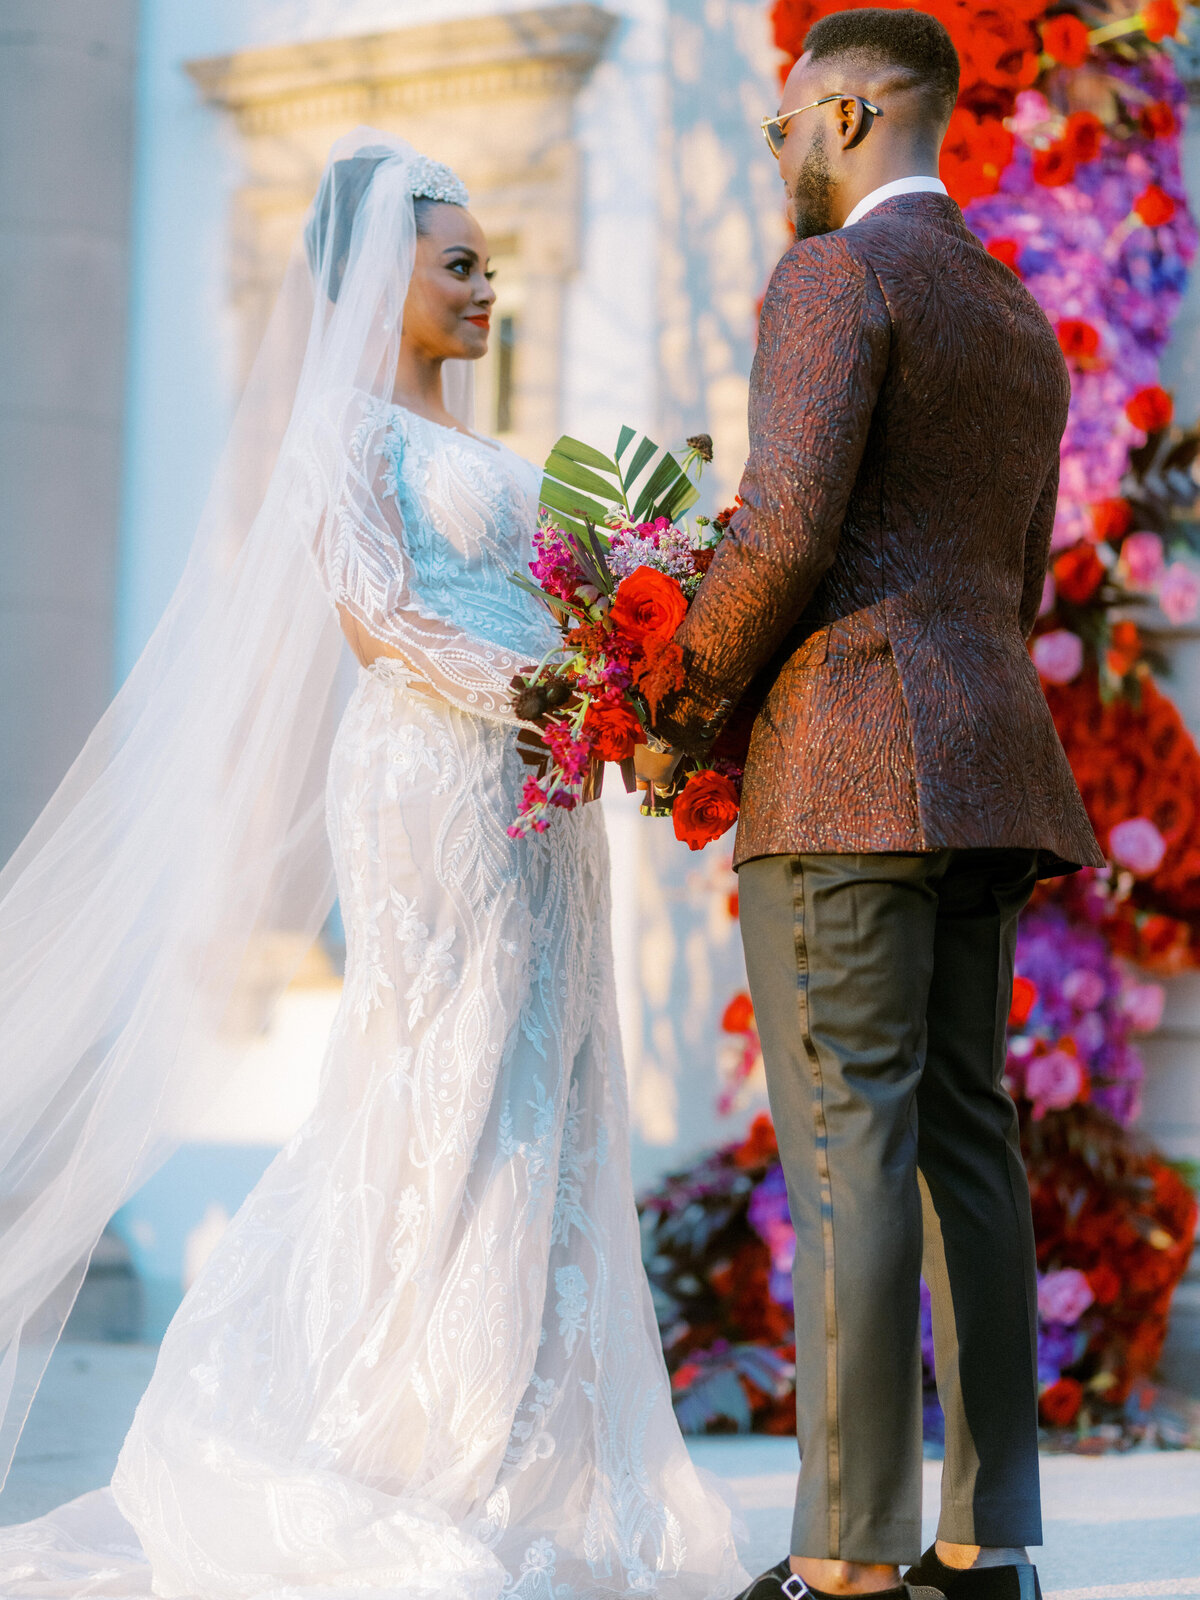 LIRIODENDRON MANSION WEDDING - BEL AIR, MD